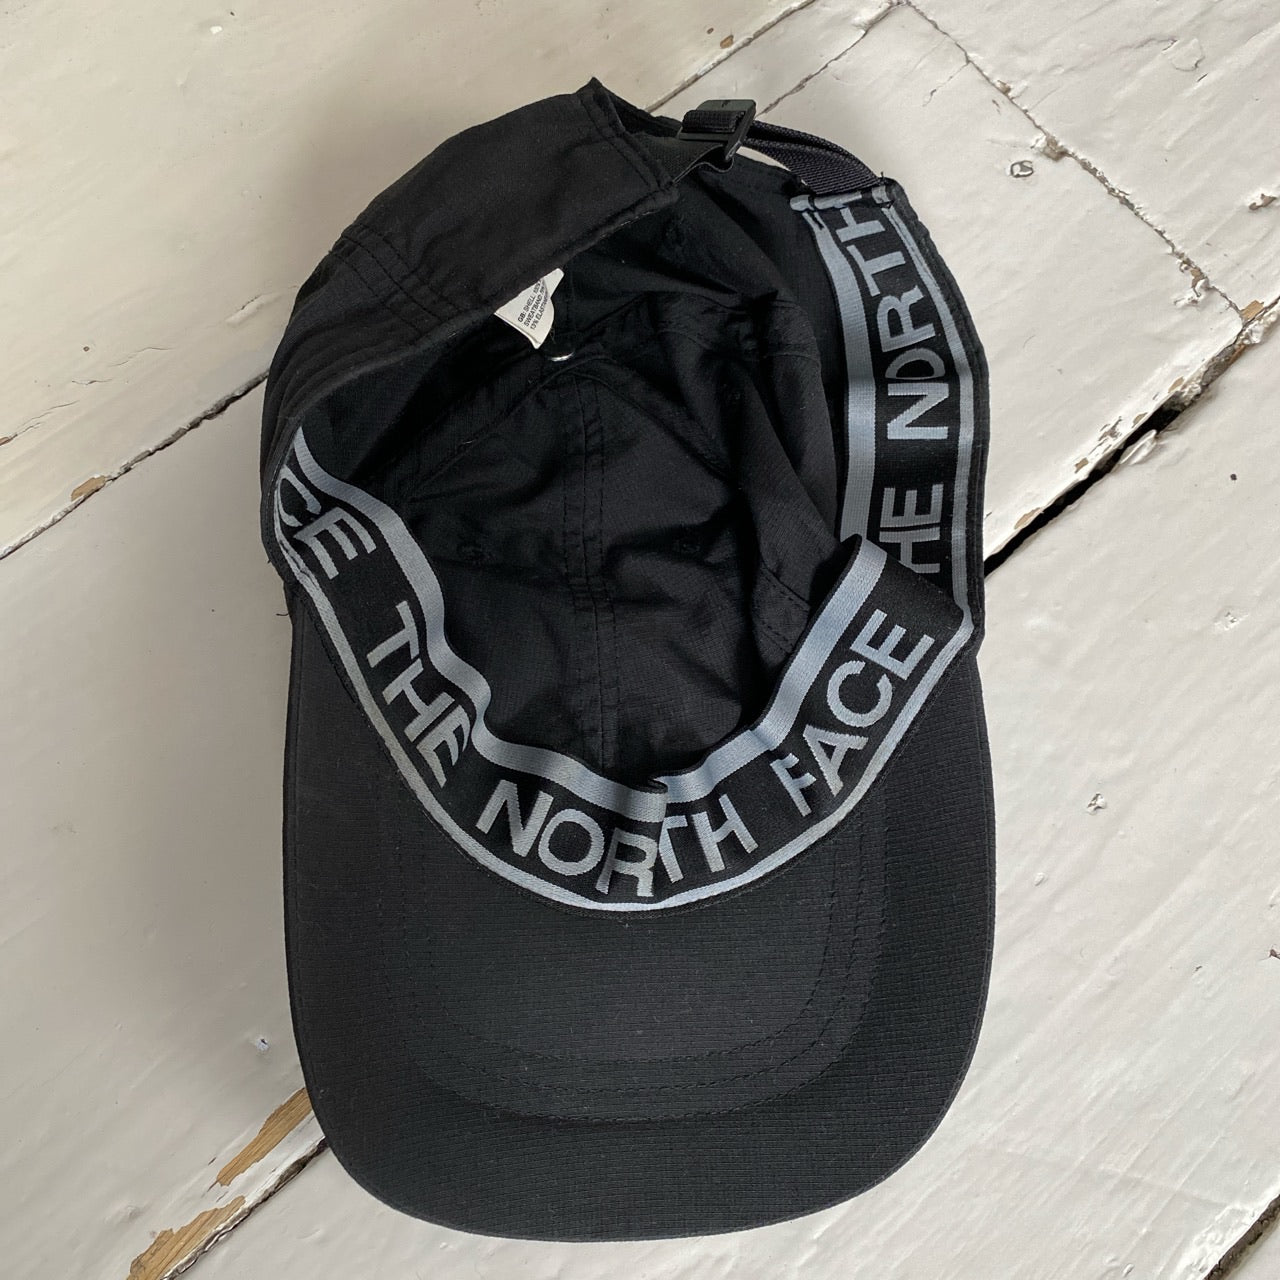 The North Face Nylon Black Cap